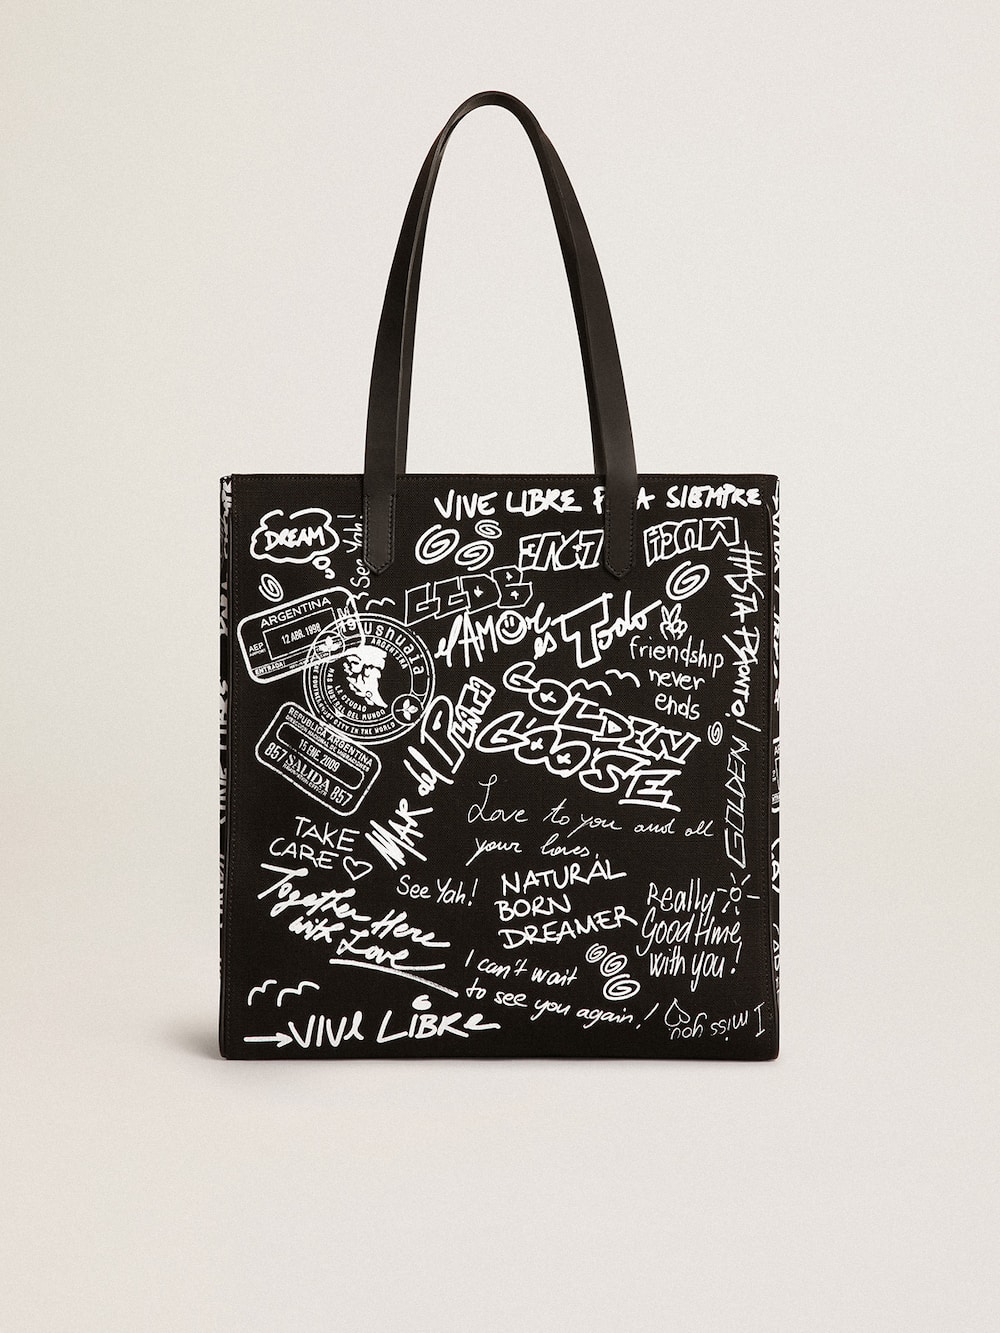 Golden Goose - Sac California Bag North-South noir avec imprimé graffiti blanc contrasté in 